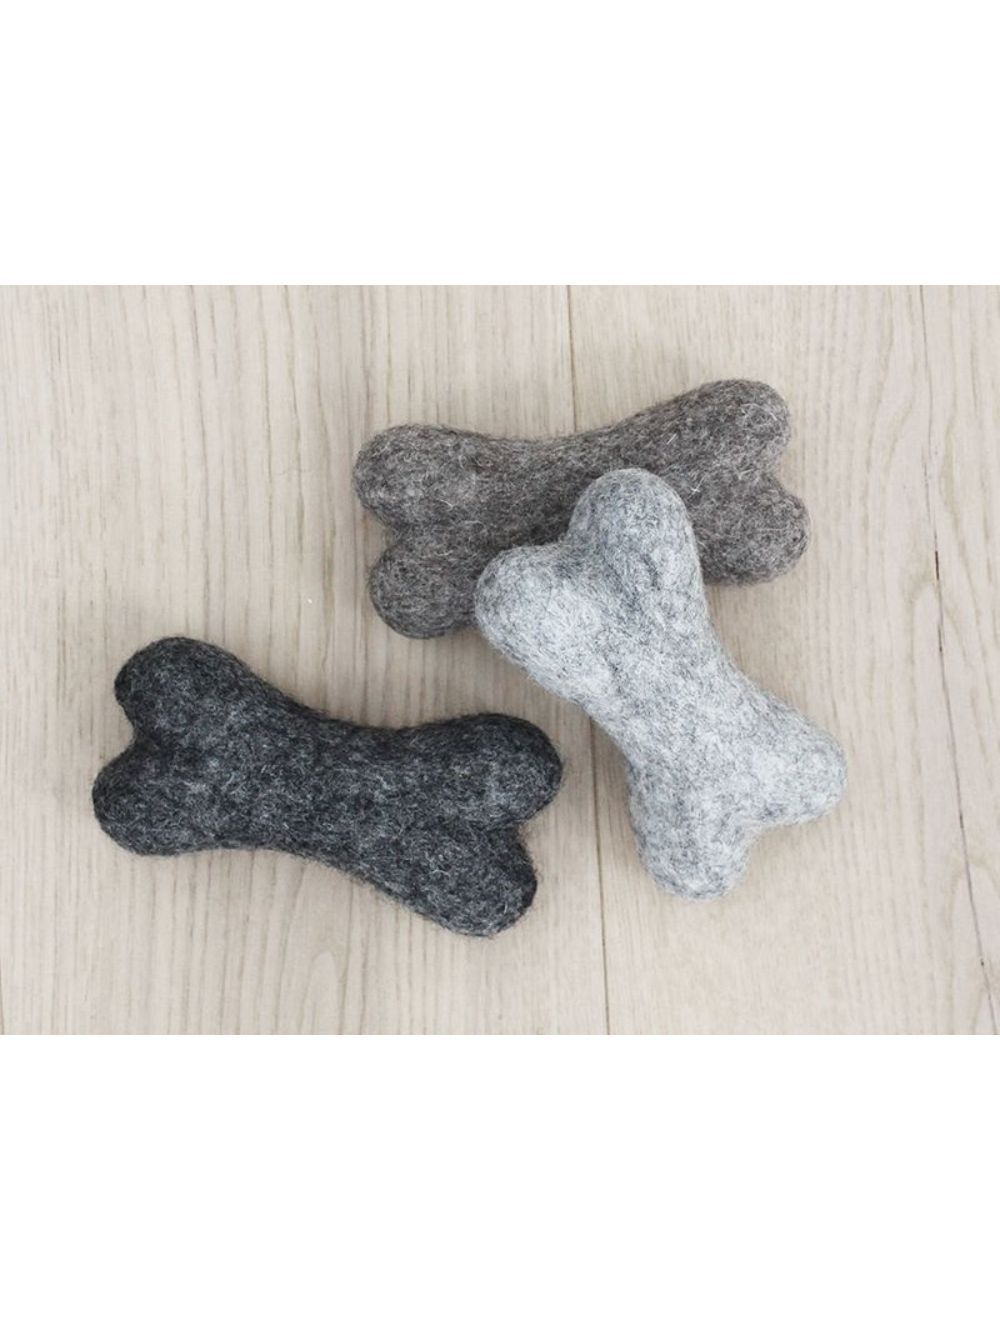 Wooldot - tygge legetøj af ren uld  - Stålgrå  - 22x7x5cm